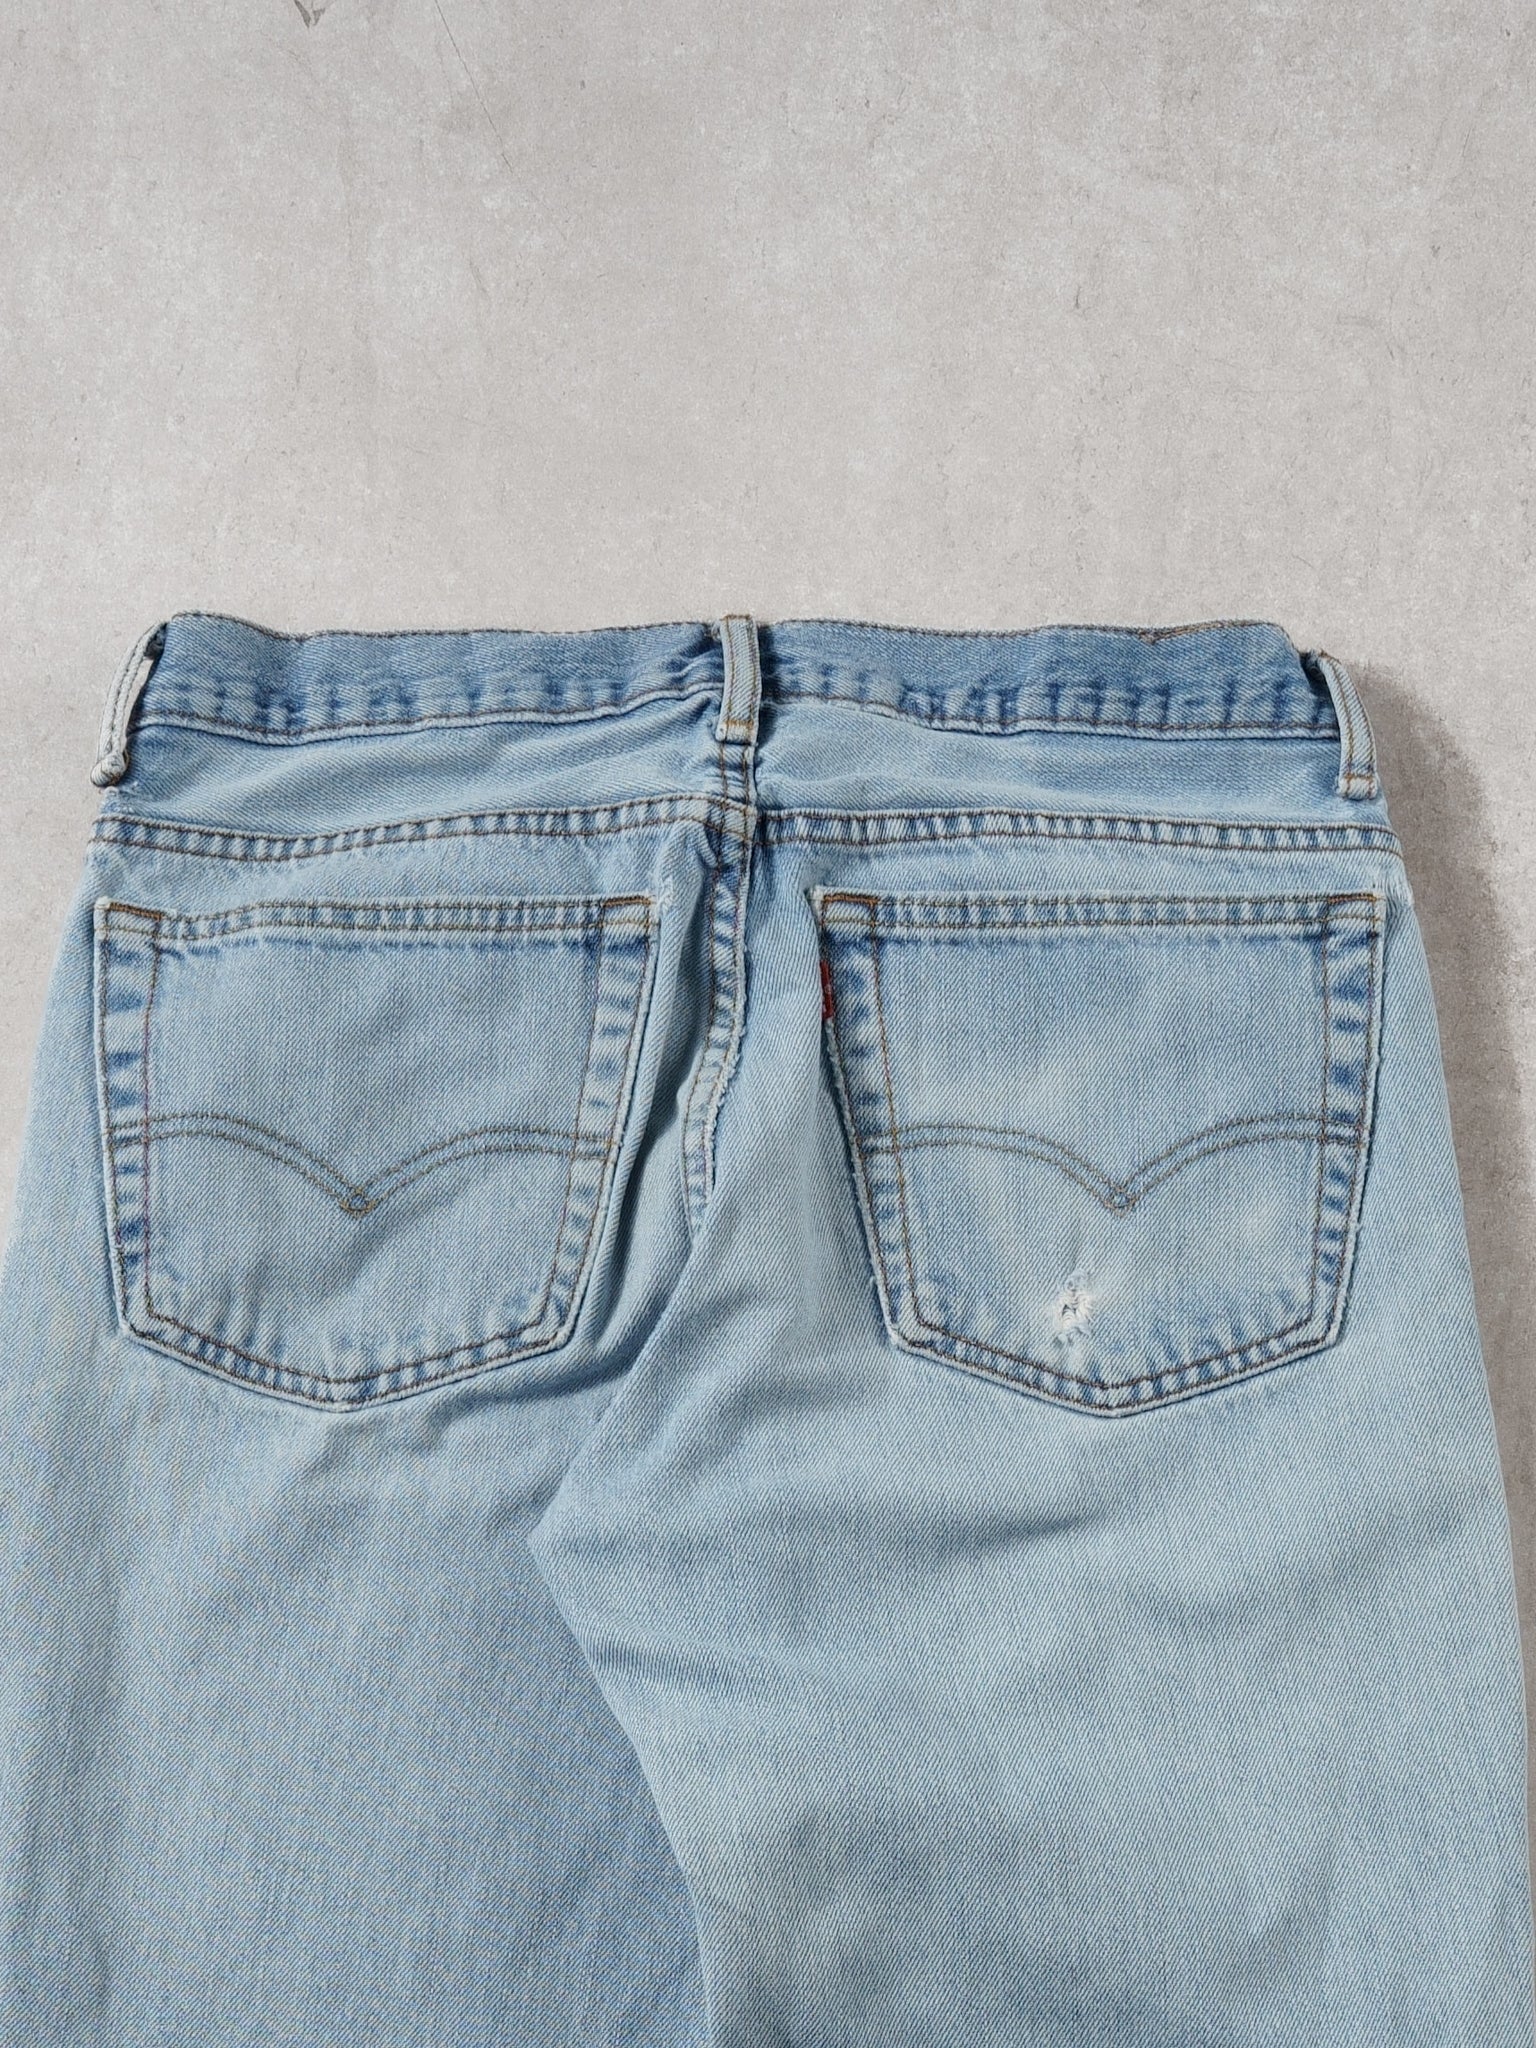 Vintage 90s Light Blue Levi's Straight Denim Jeans (30x32)